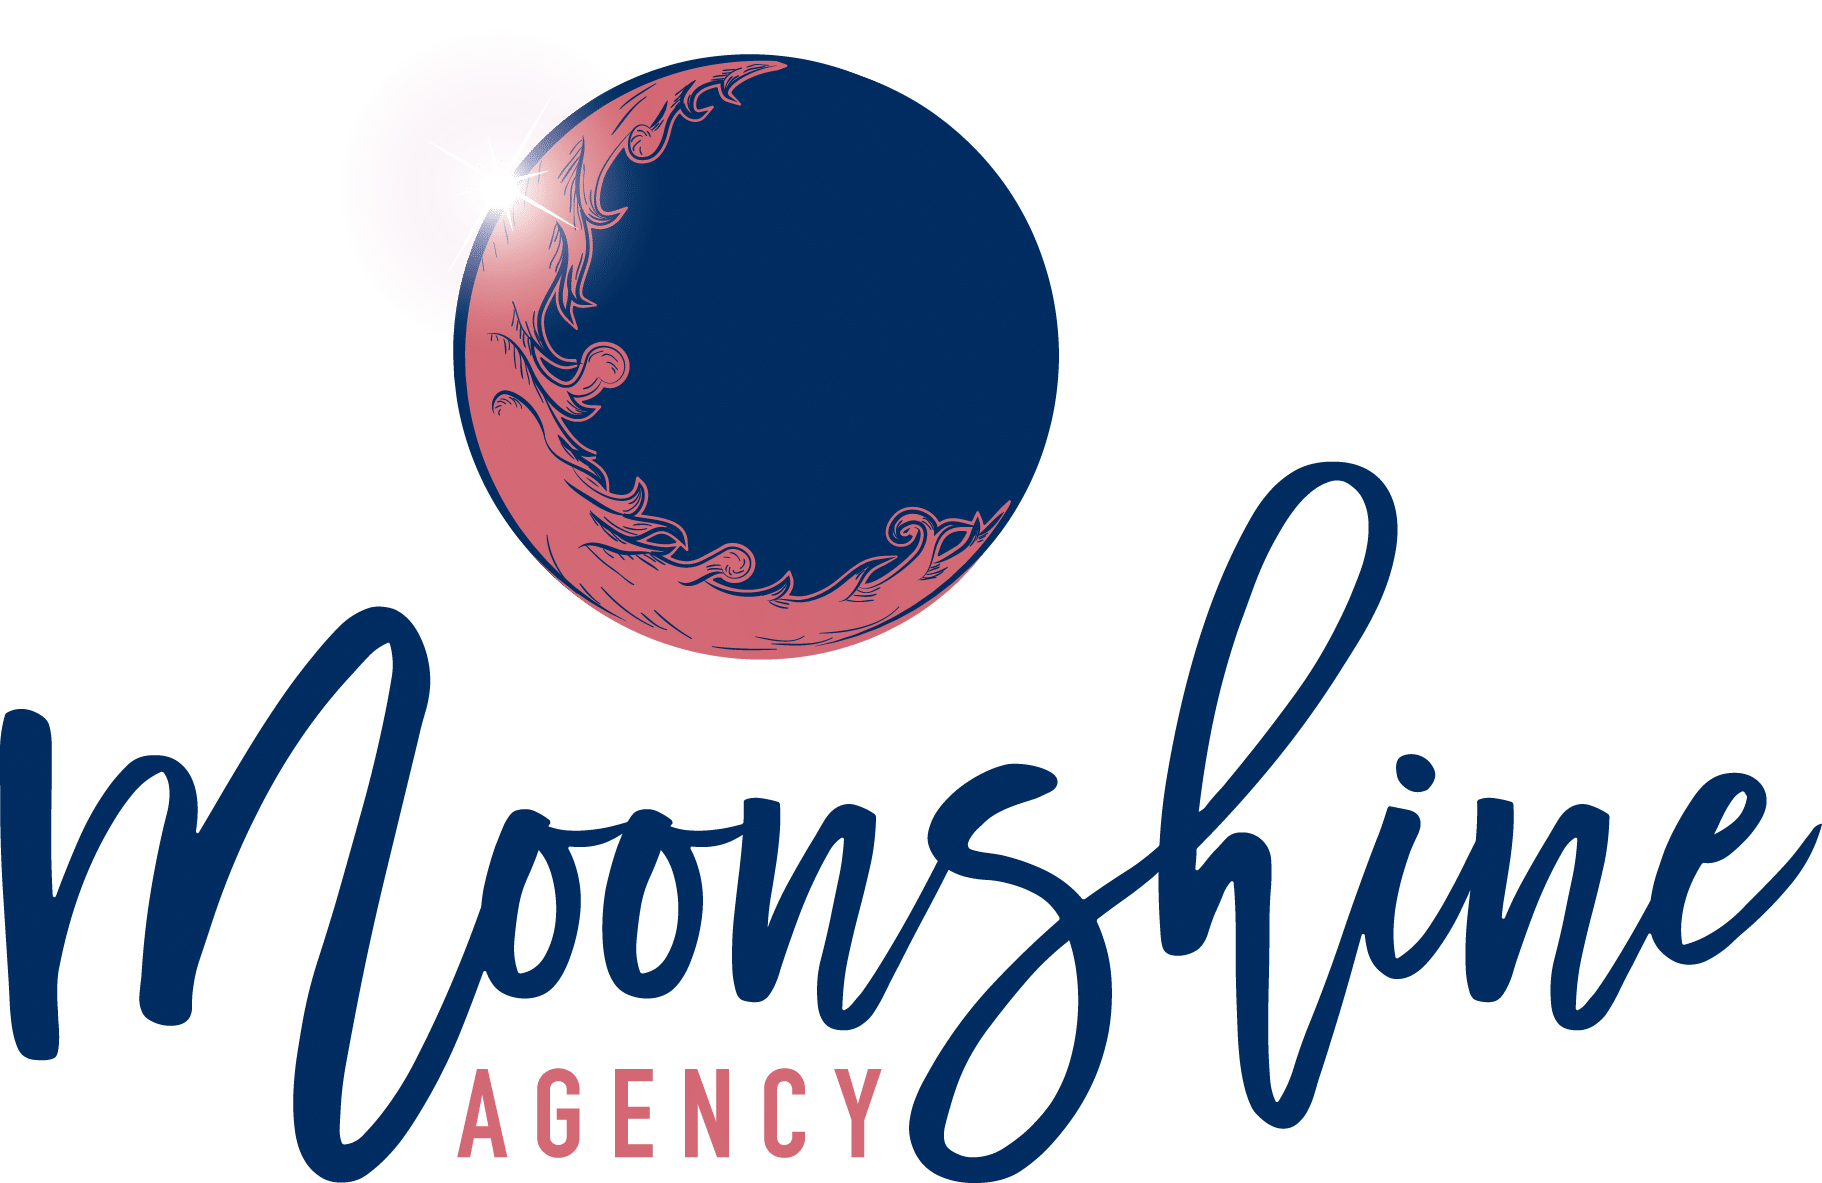 Moonshine Agency